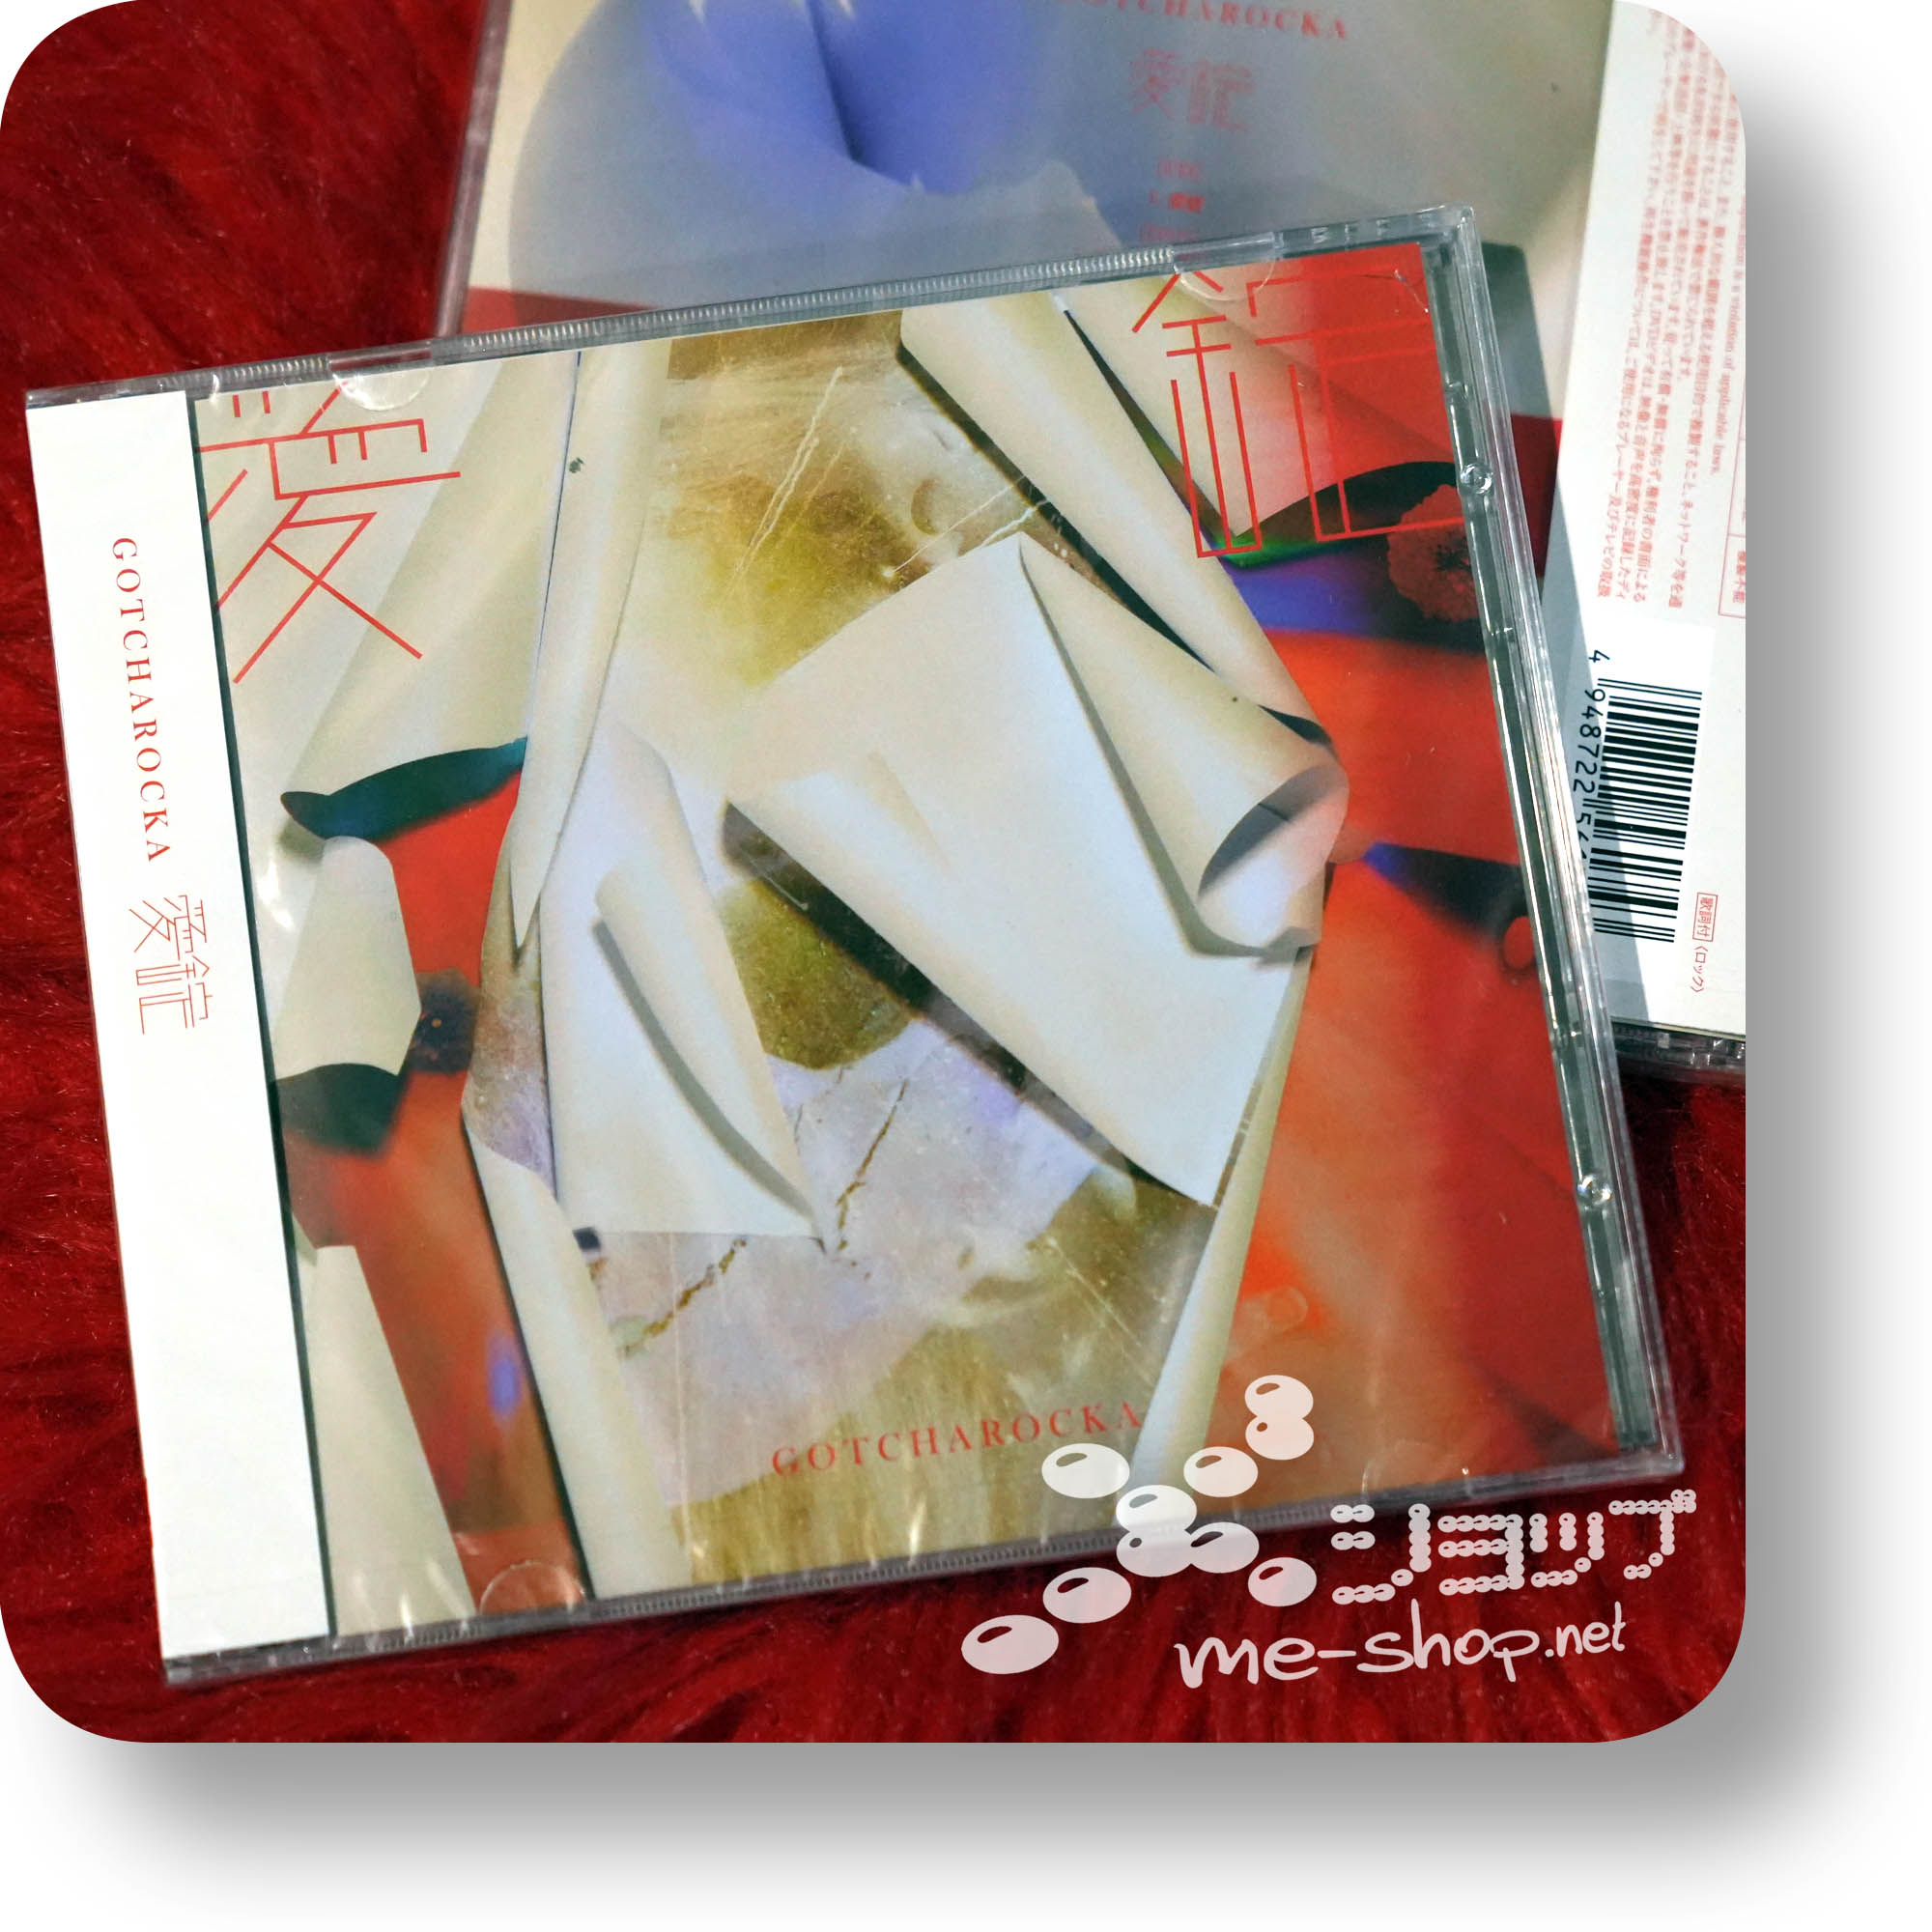 GOTCHAROCKA - Aijyou (special limited edition CD+DVD) | me-shop